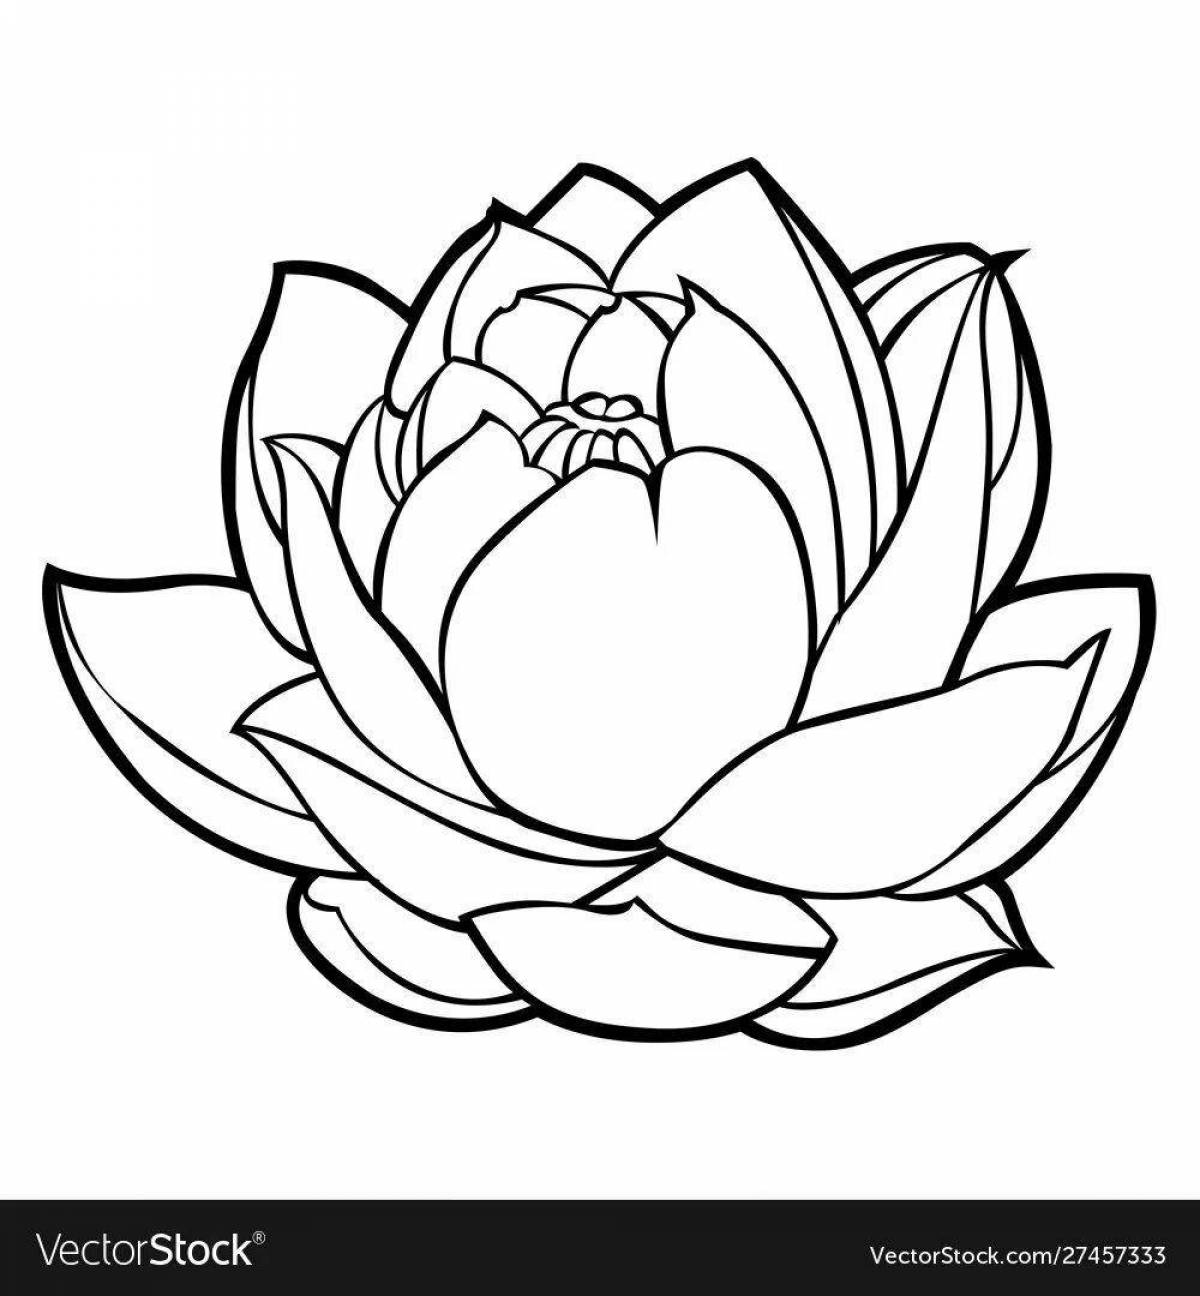 Bright coloring lotus flower